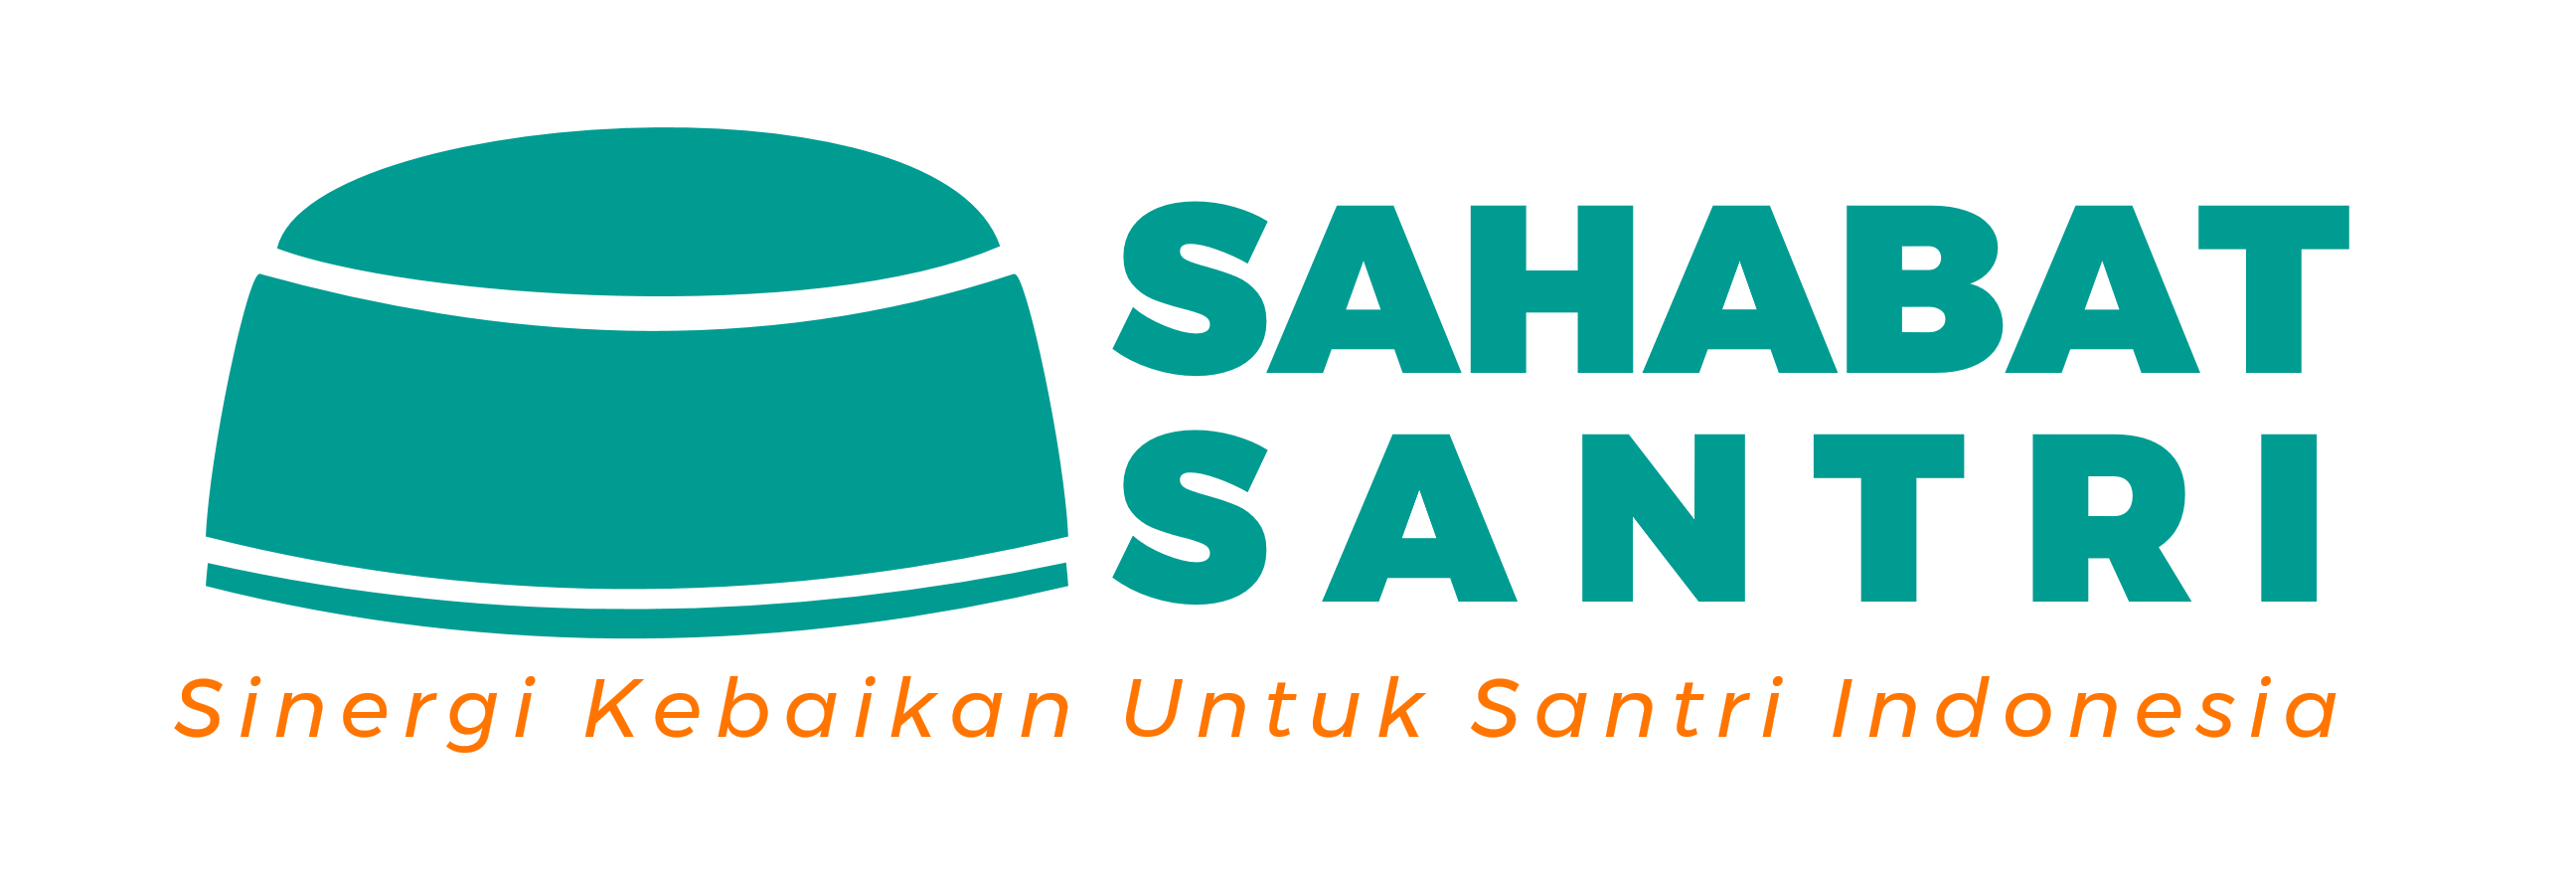 Yayasan Sahabat Santri Indonesia